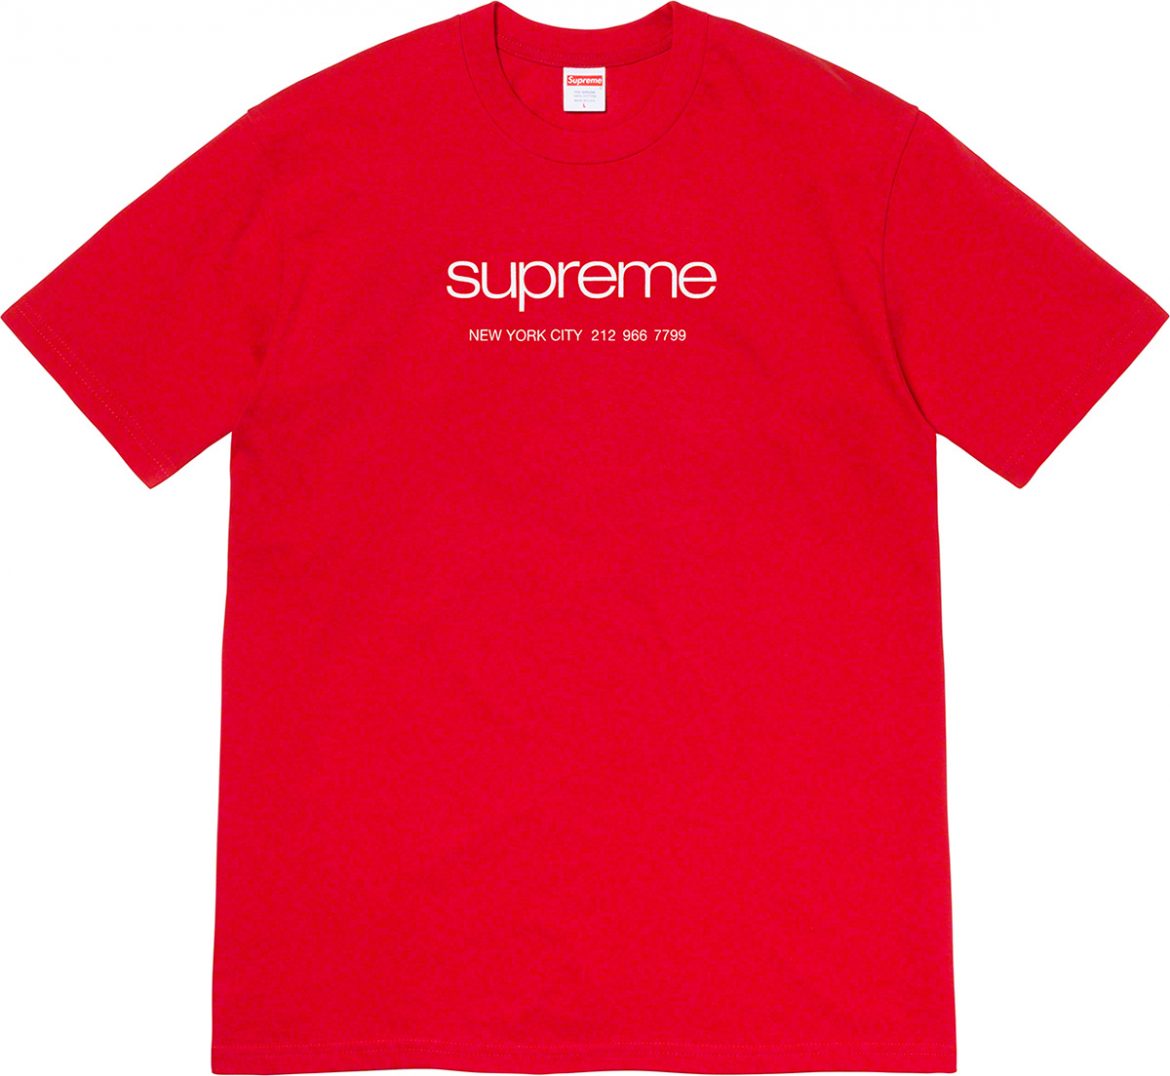 Supreme S/S20 SS20 2020 Shop Tee